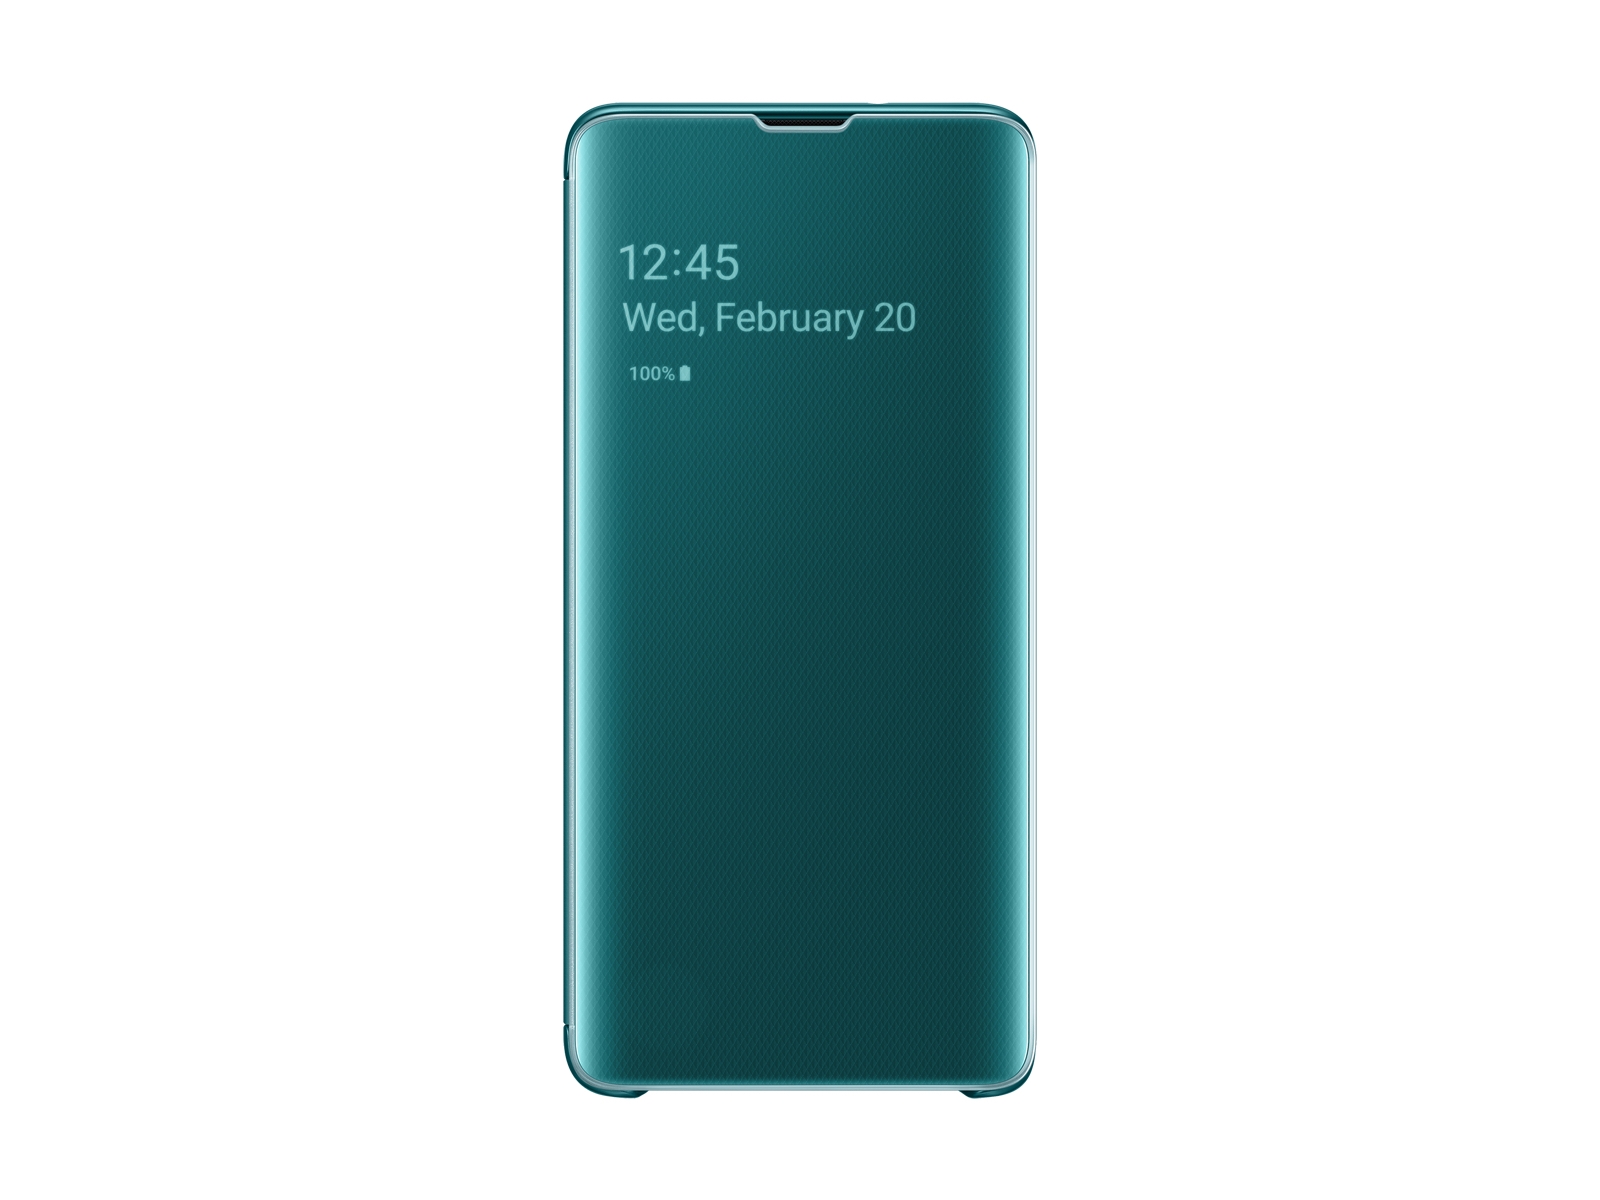 Samsung Galaxy S10 Plus Green